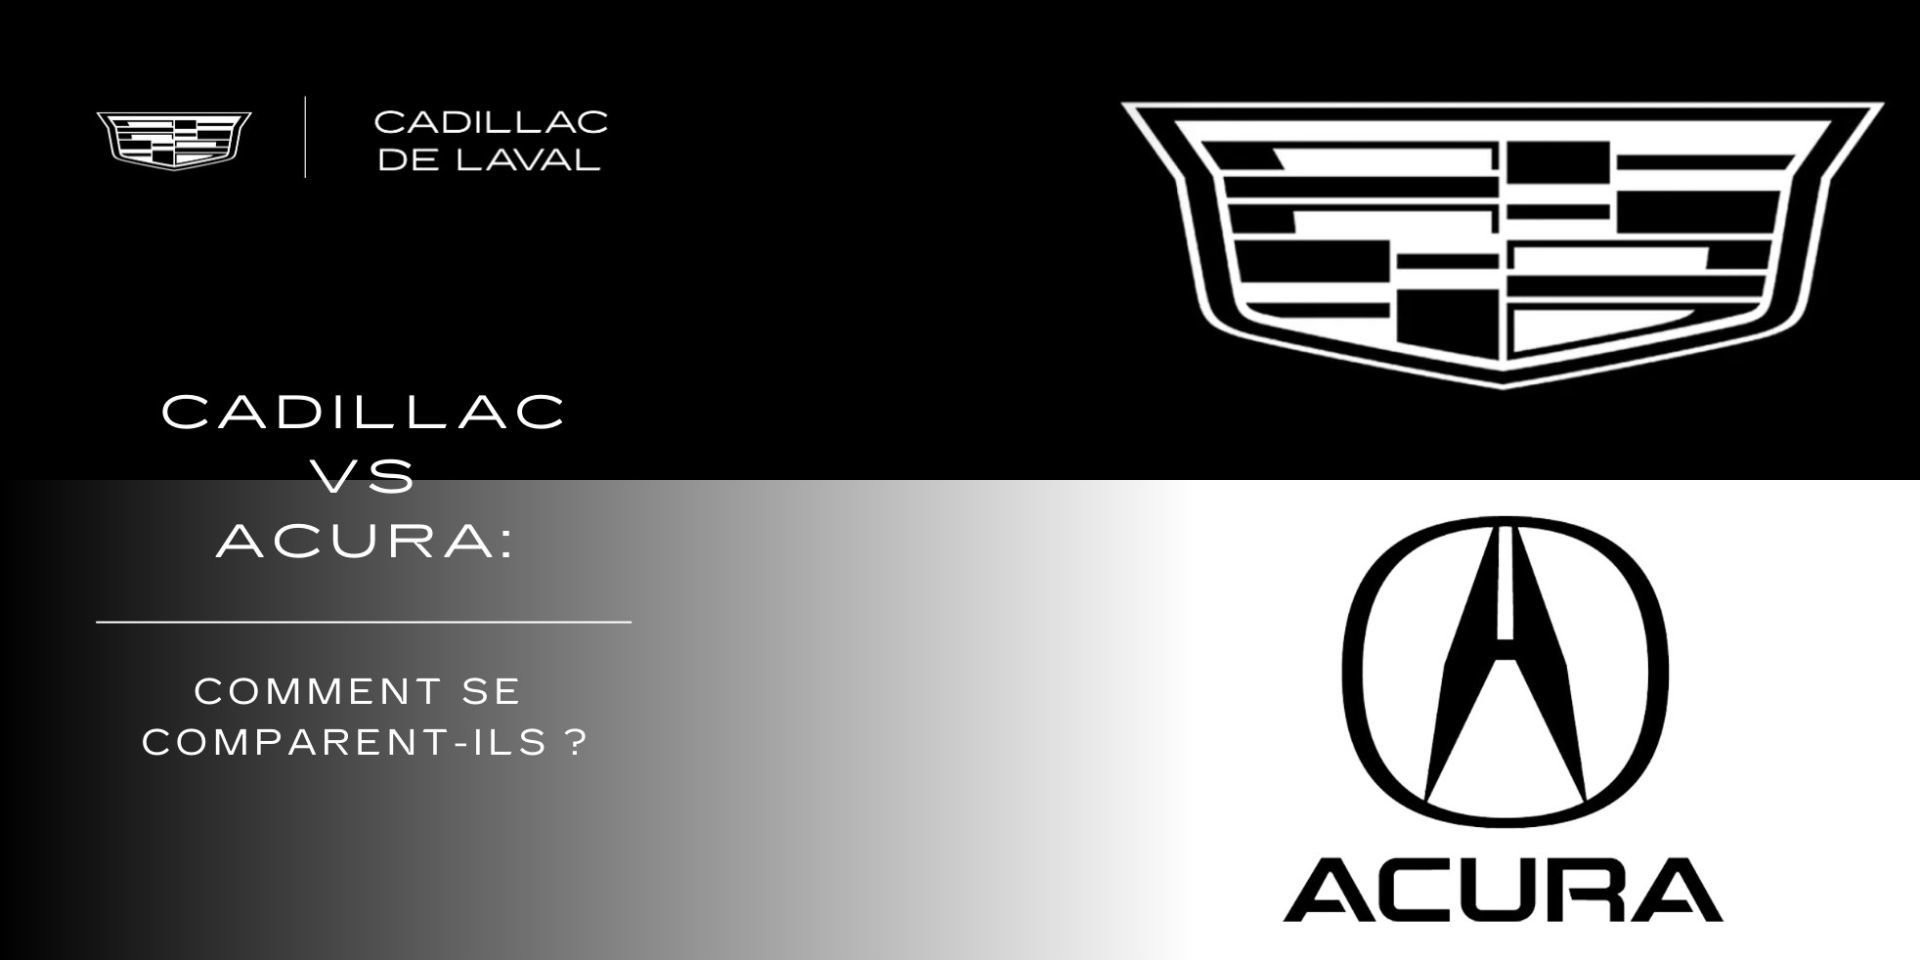 Cadillac vs Acura: How do they compare?